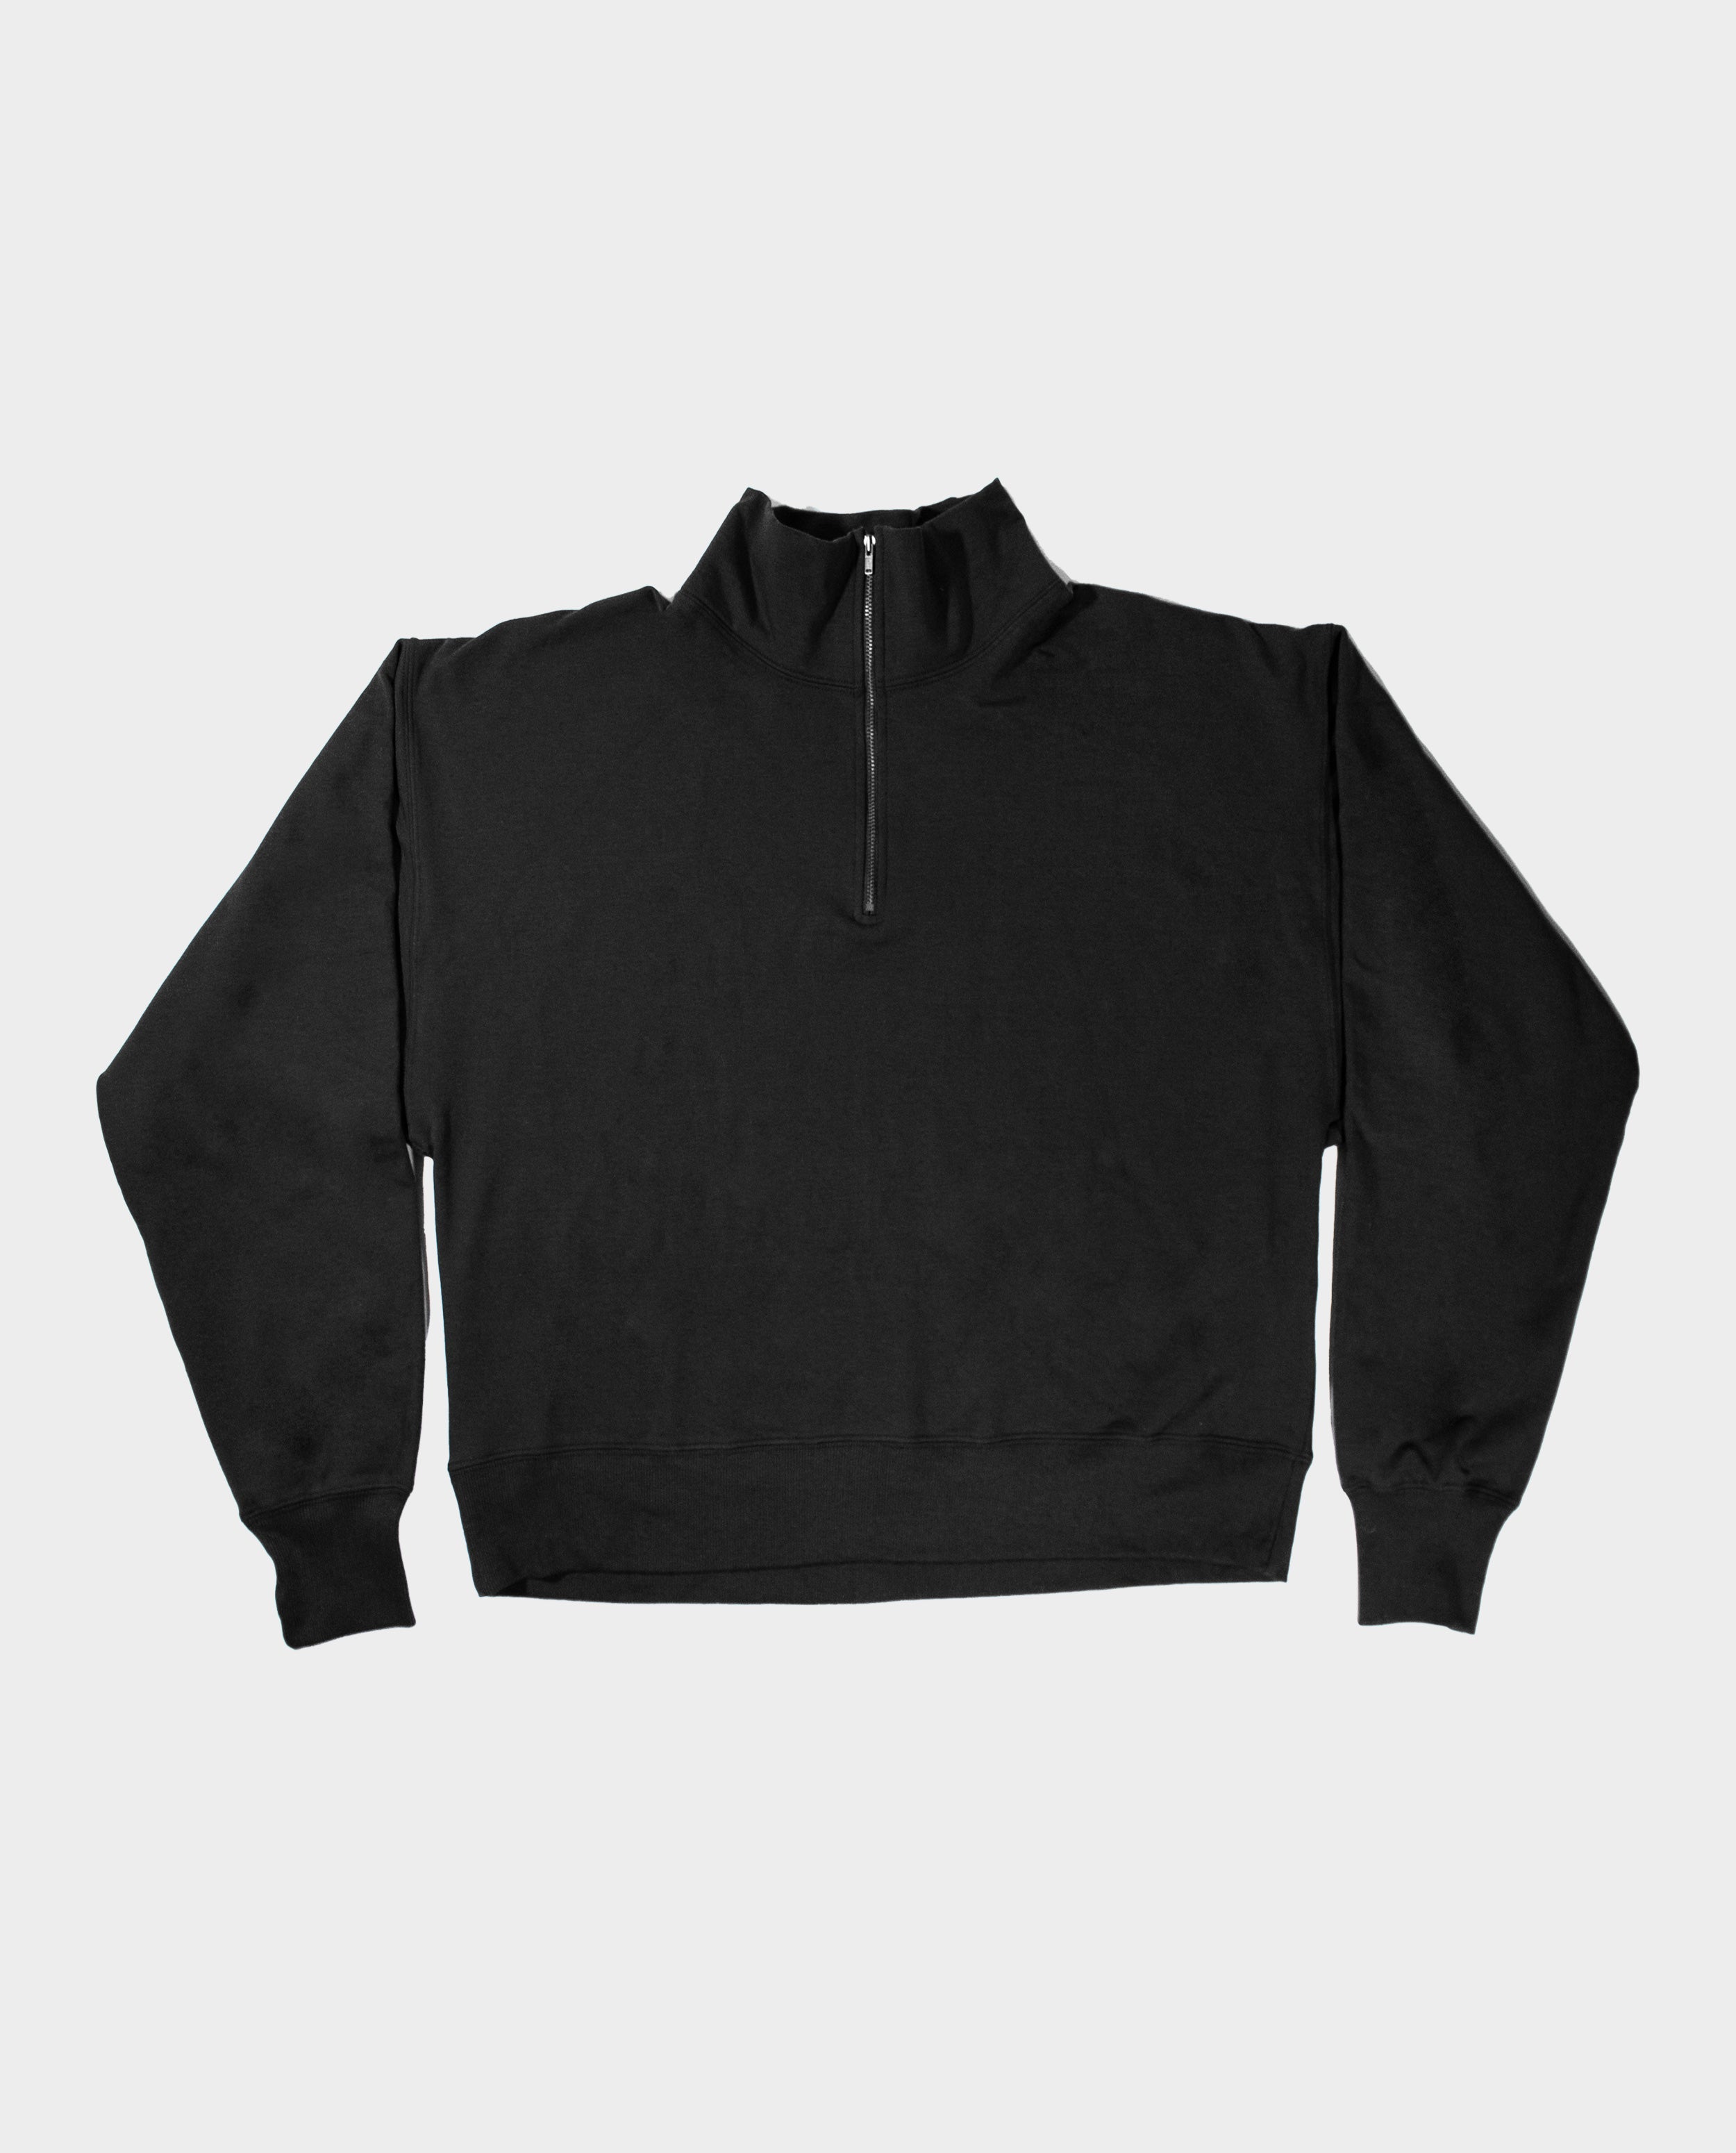 The 1/4 Zip Sweatshirt | FRANC Sustainable Clothing